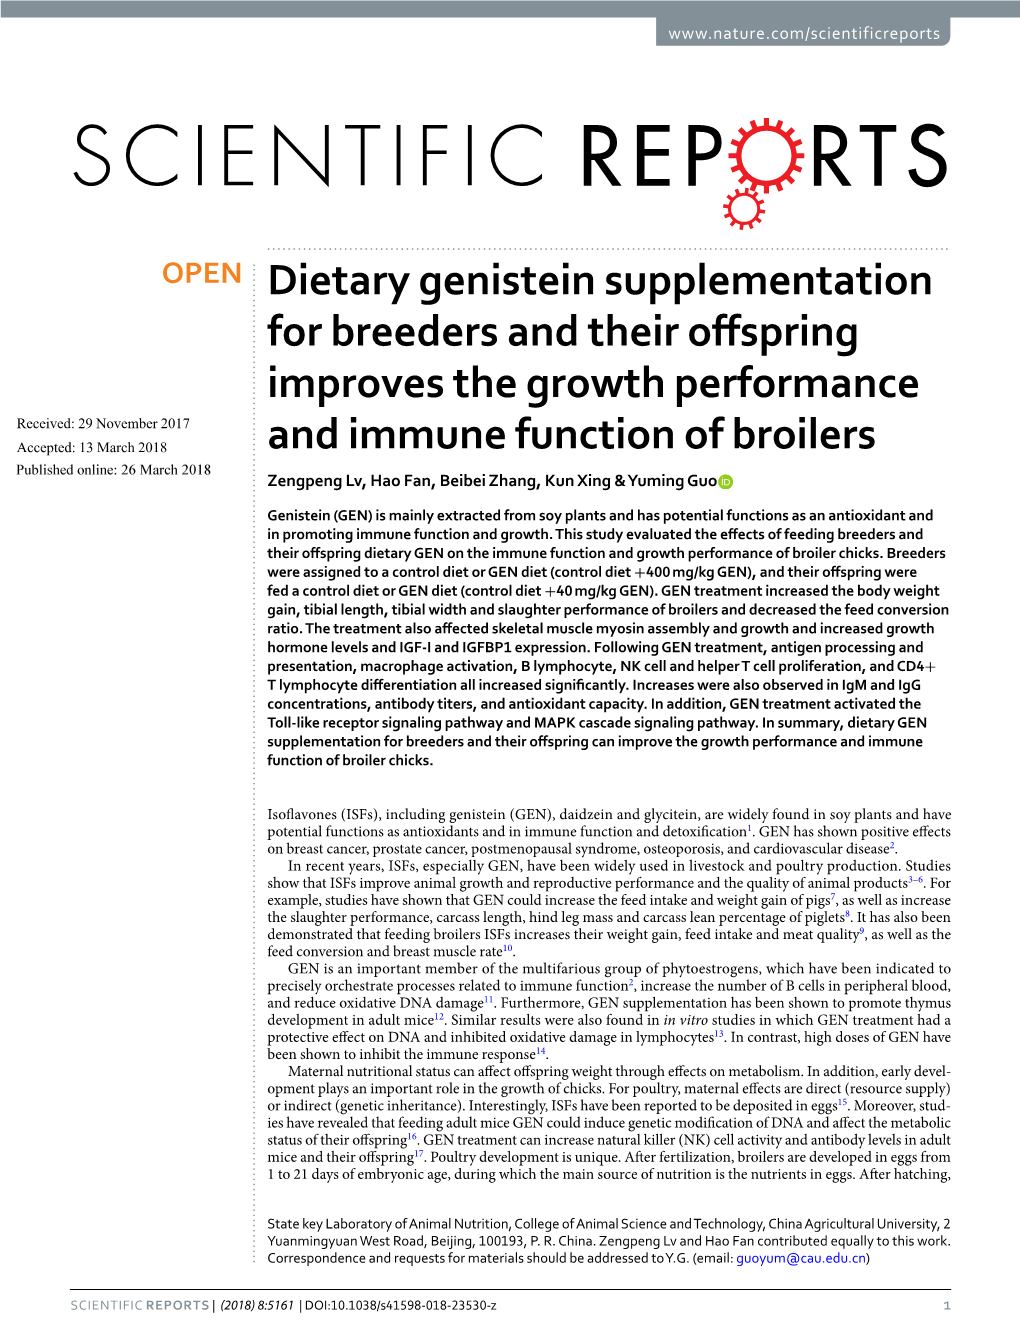 Dietary Genistein Supplementation for Breeders and Their Offspring